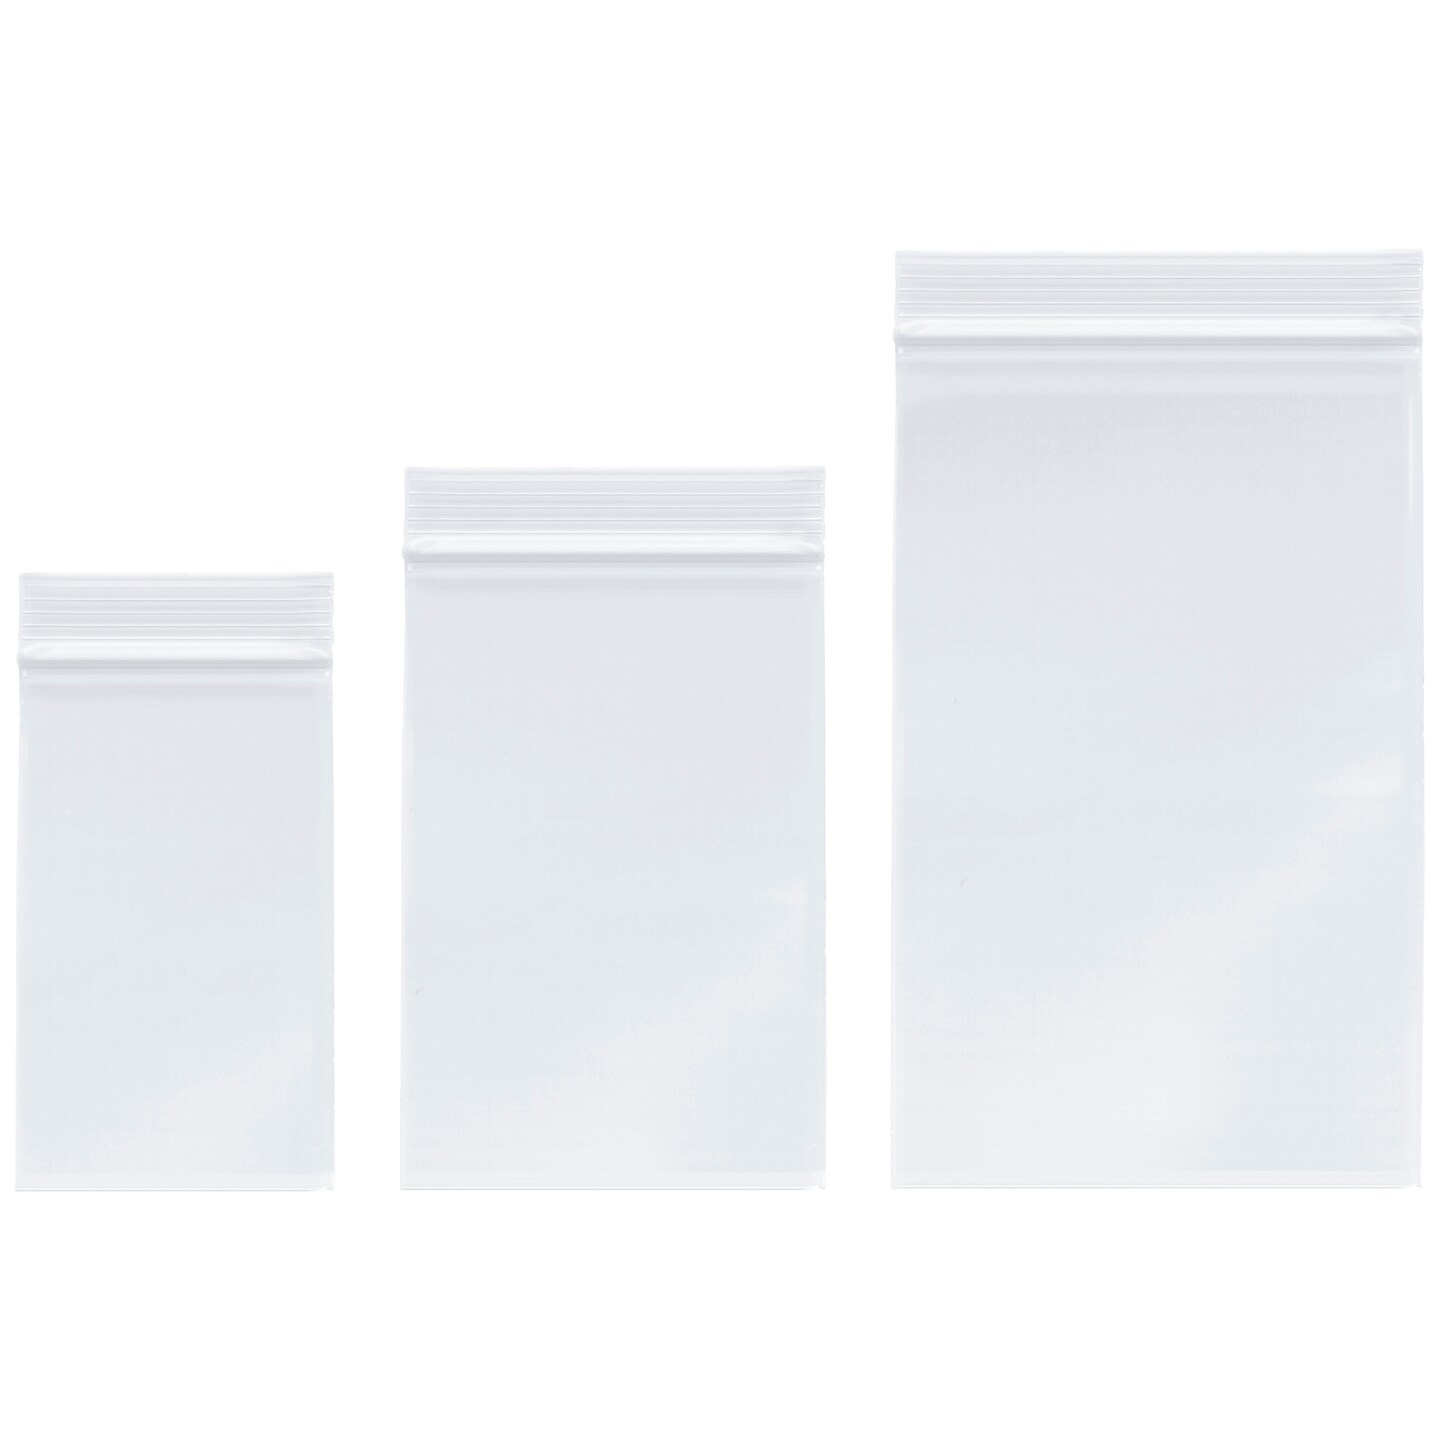 Plymor Heavy Duty Plastic Reclosable Zipper Bags, 4 Mil Variety Pack, 2 x 2 (100), 2 x 3 (100), 3 x 3 (100)